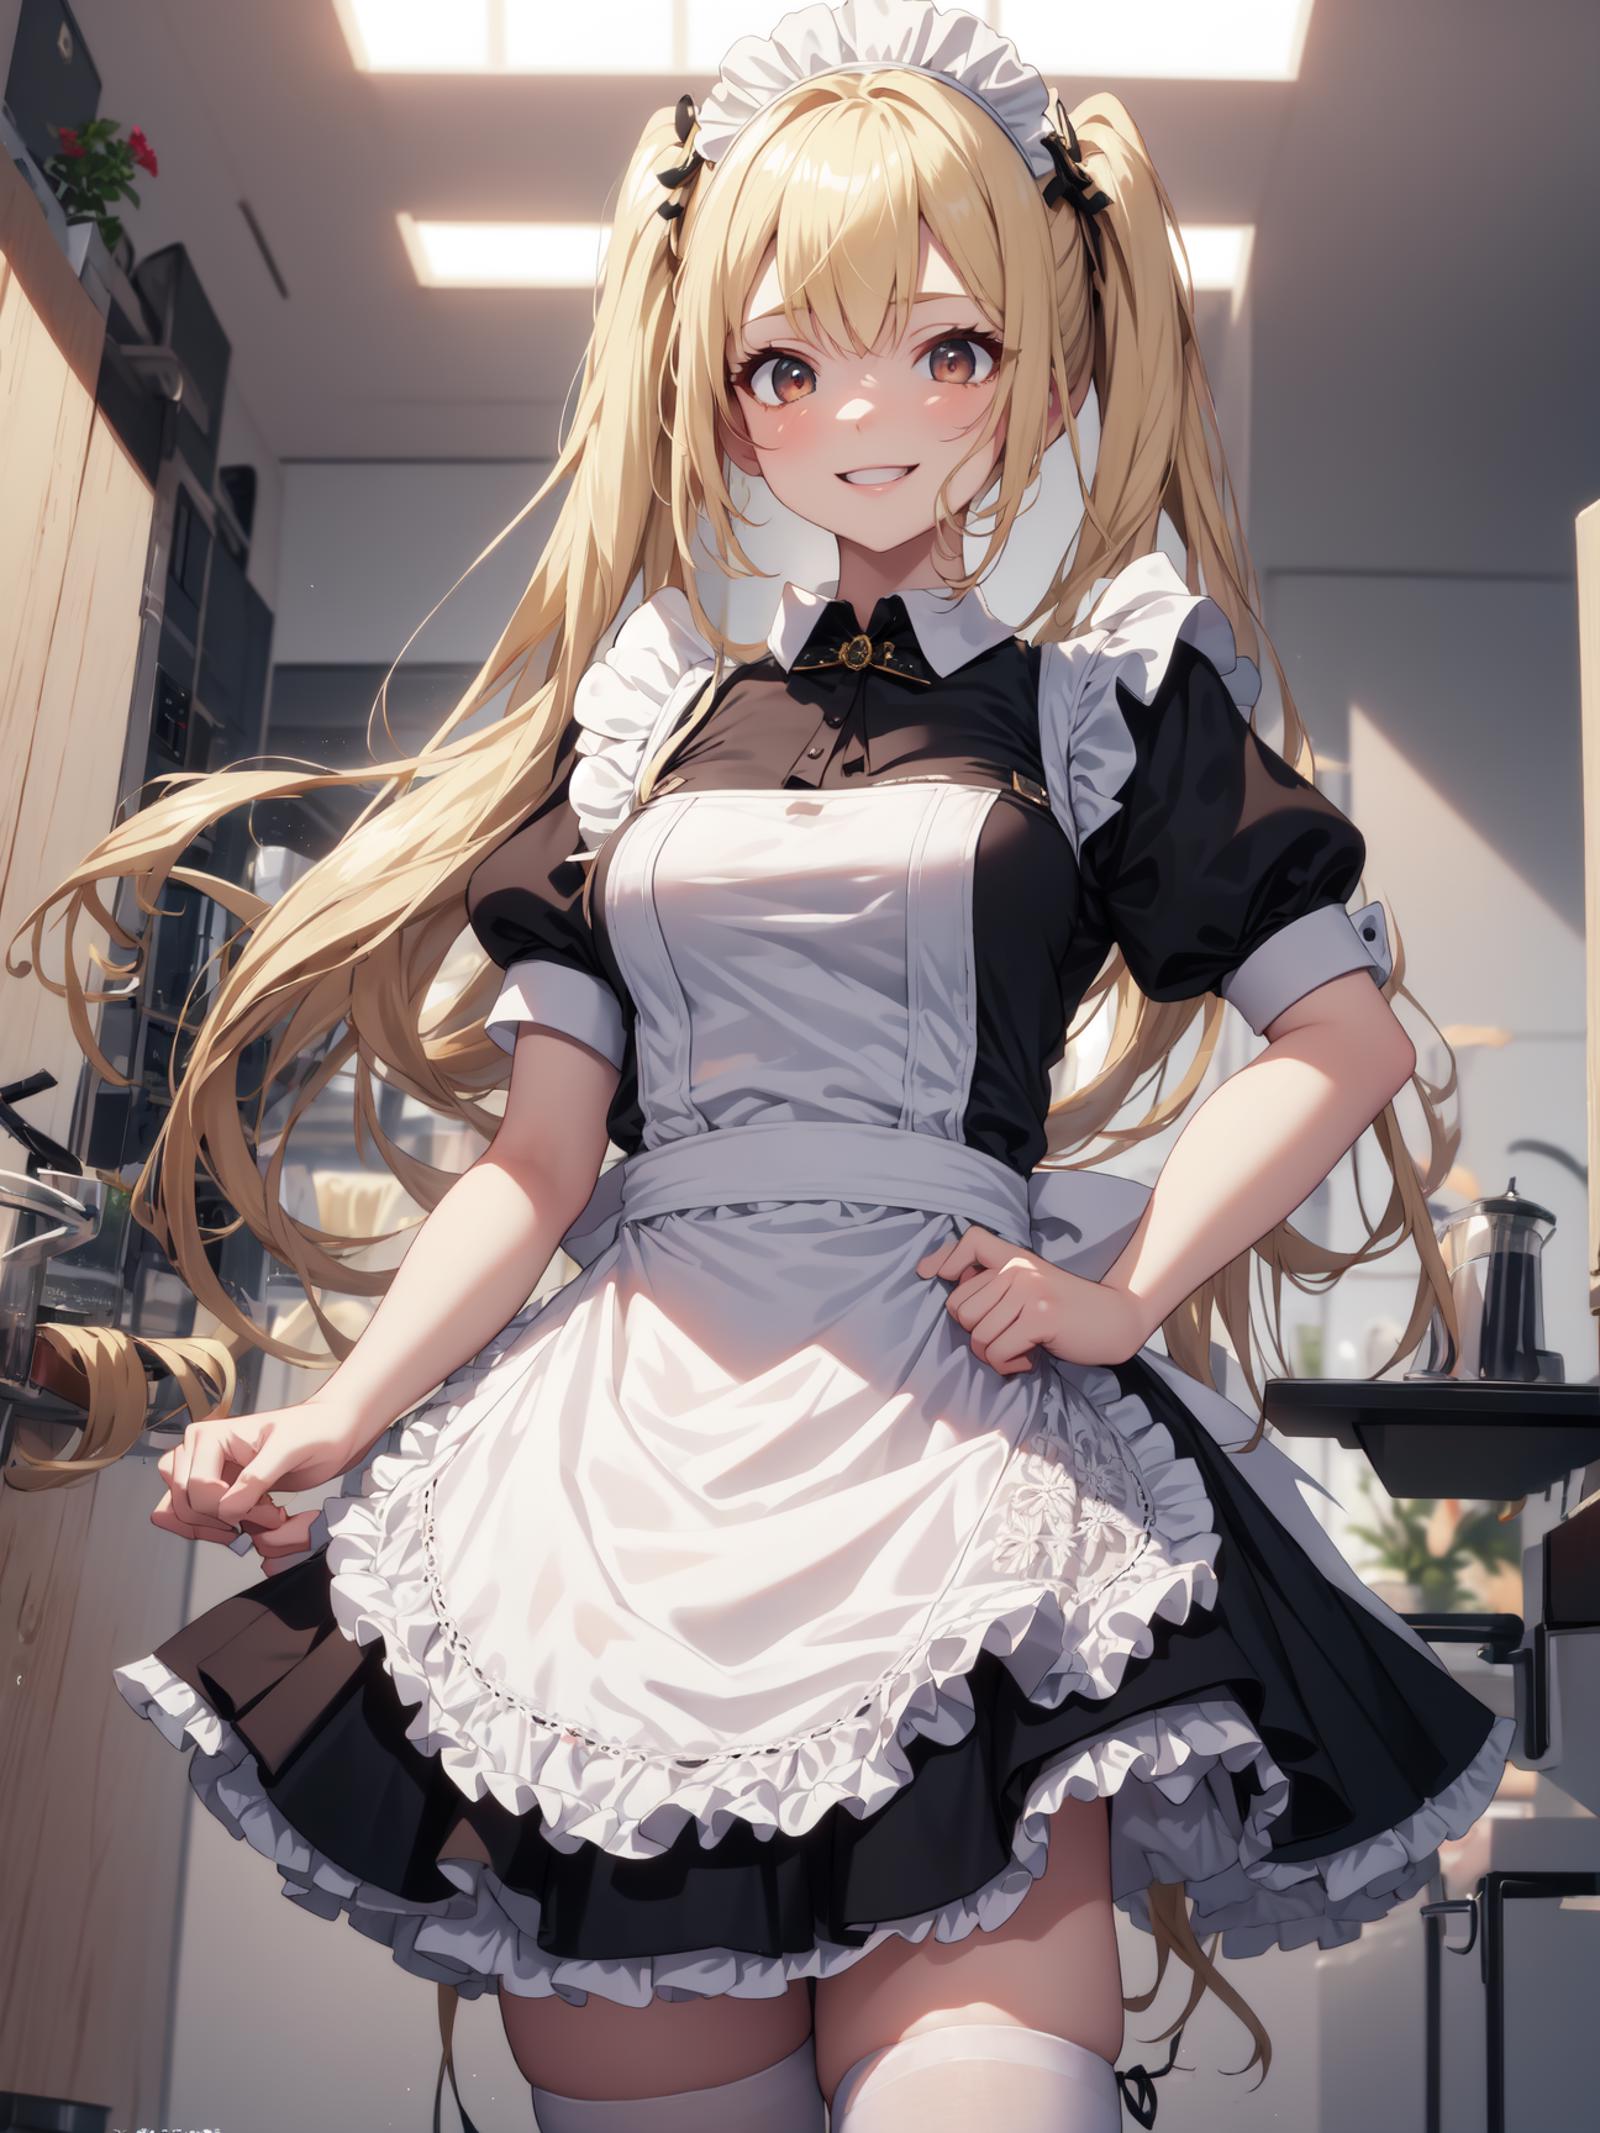 Cute Maid Dress image by n15g